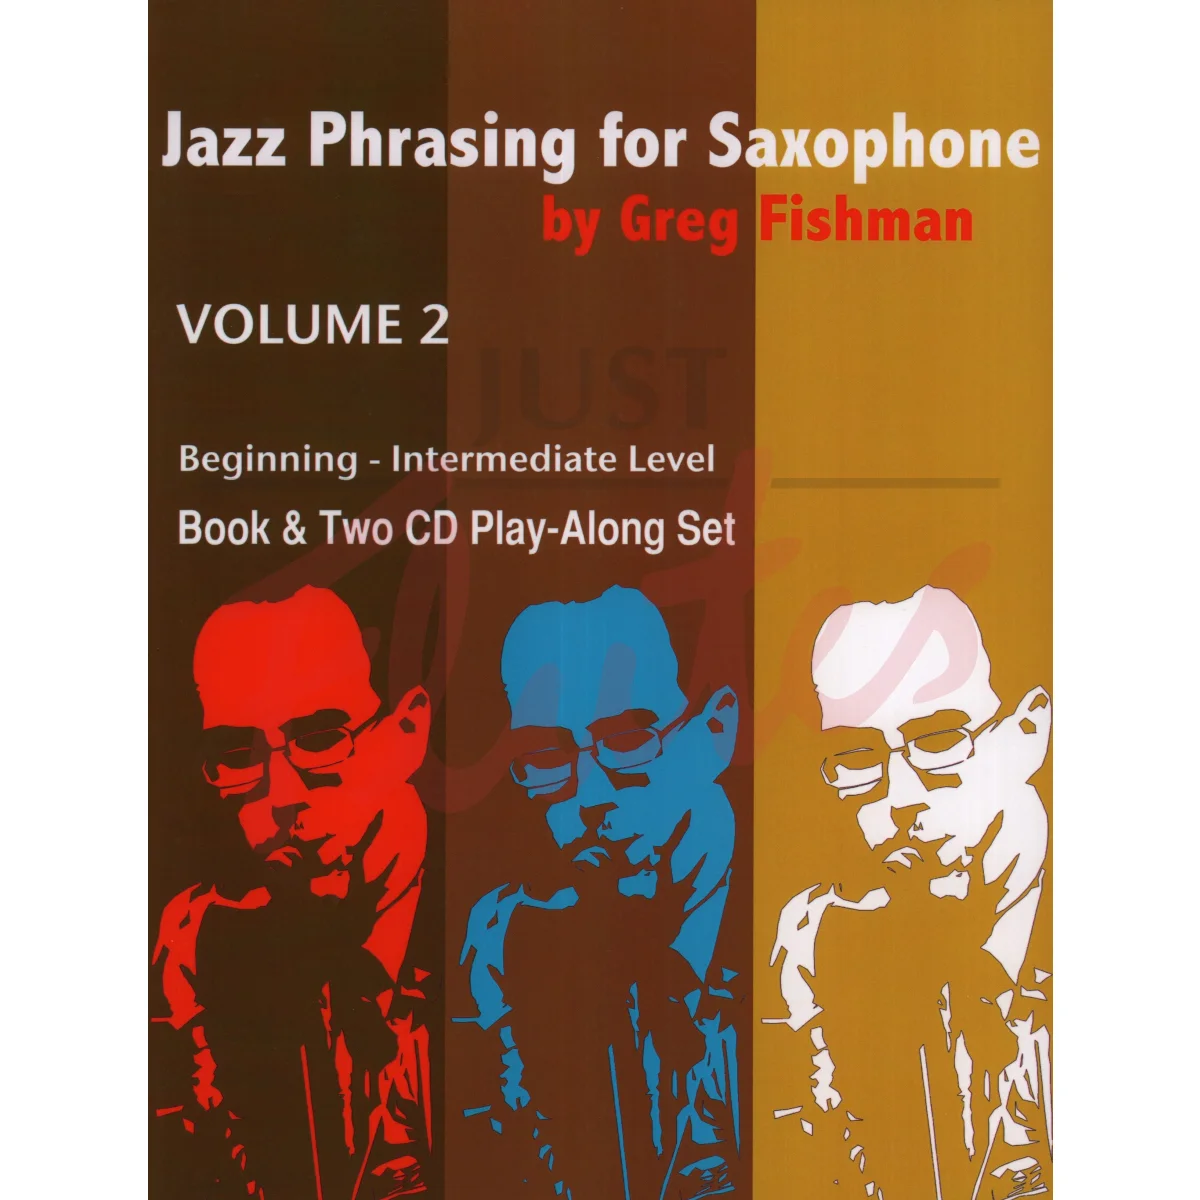 Jazz Phrasing for Saxophone Vol. 2